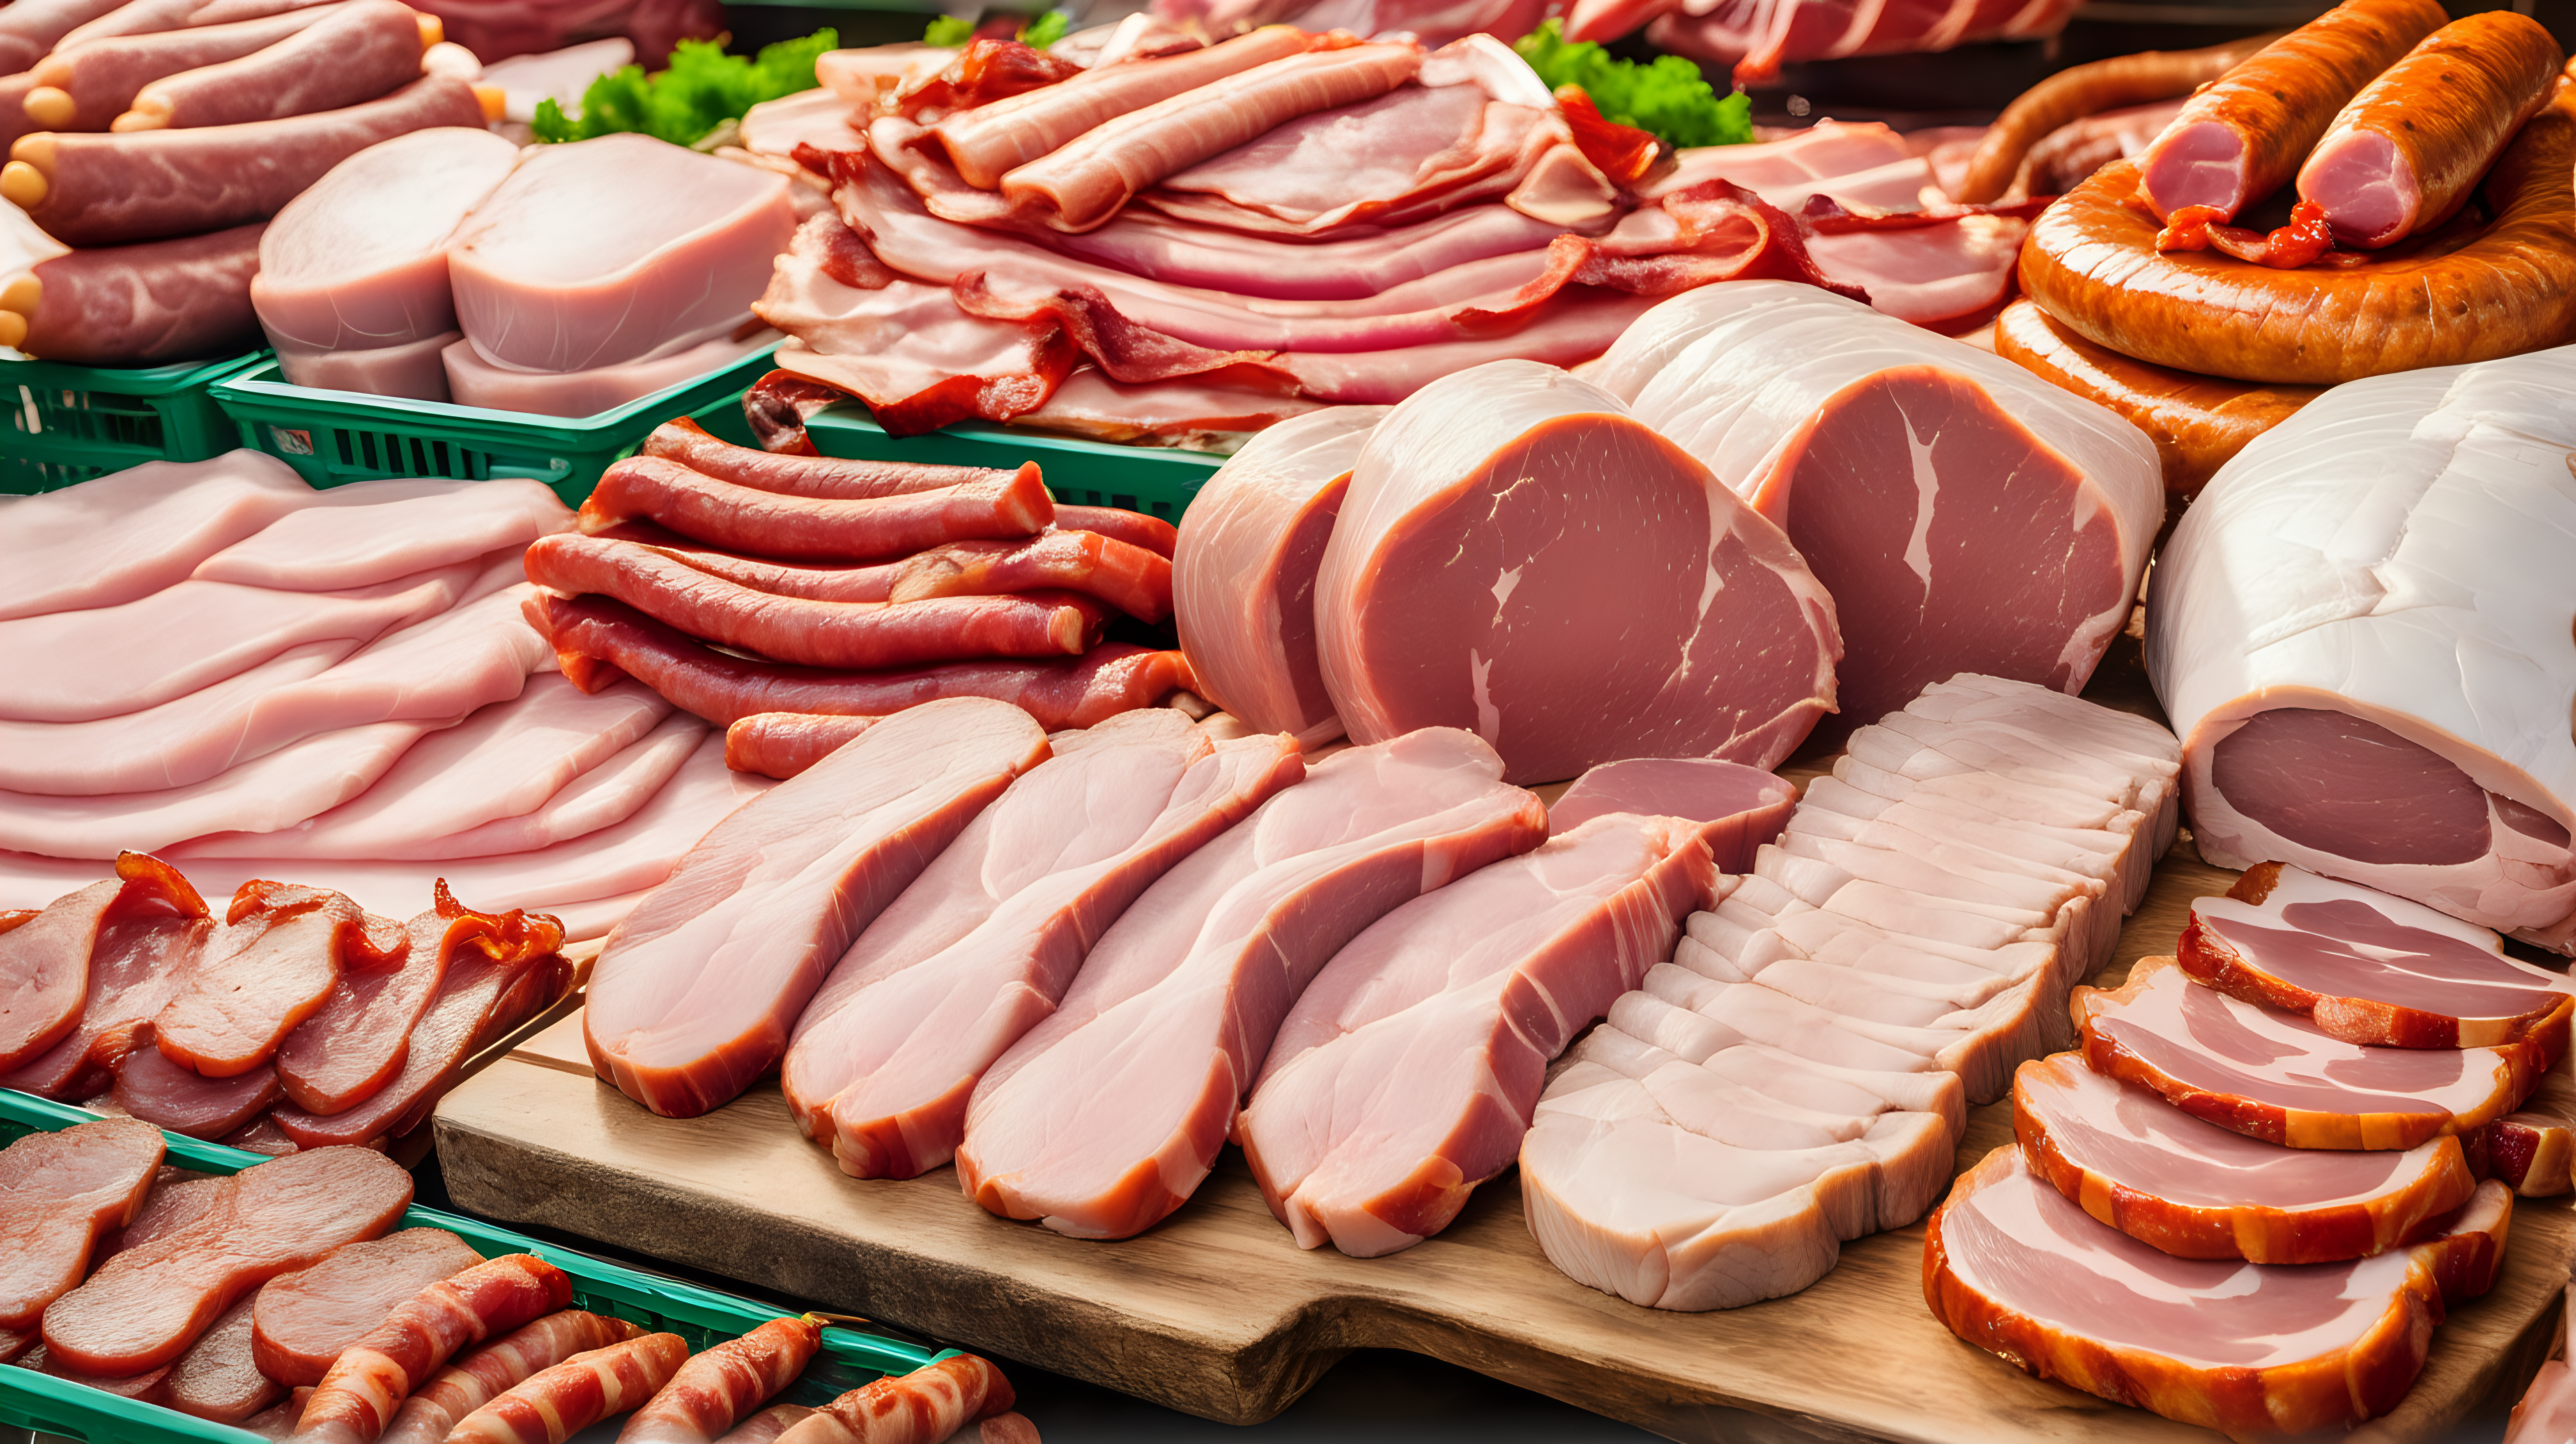 Ham bacon pork chops pork loin and sausage